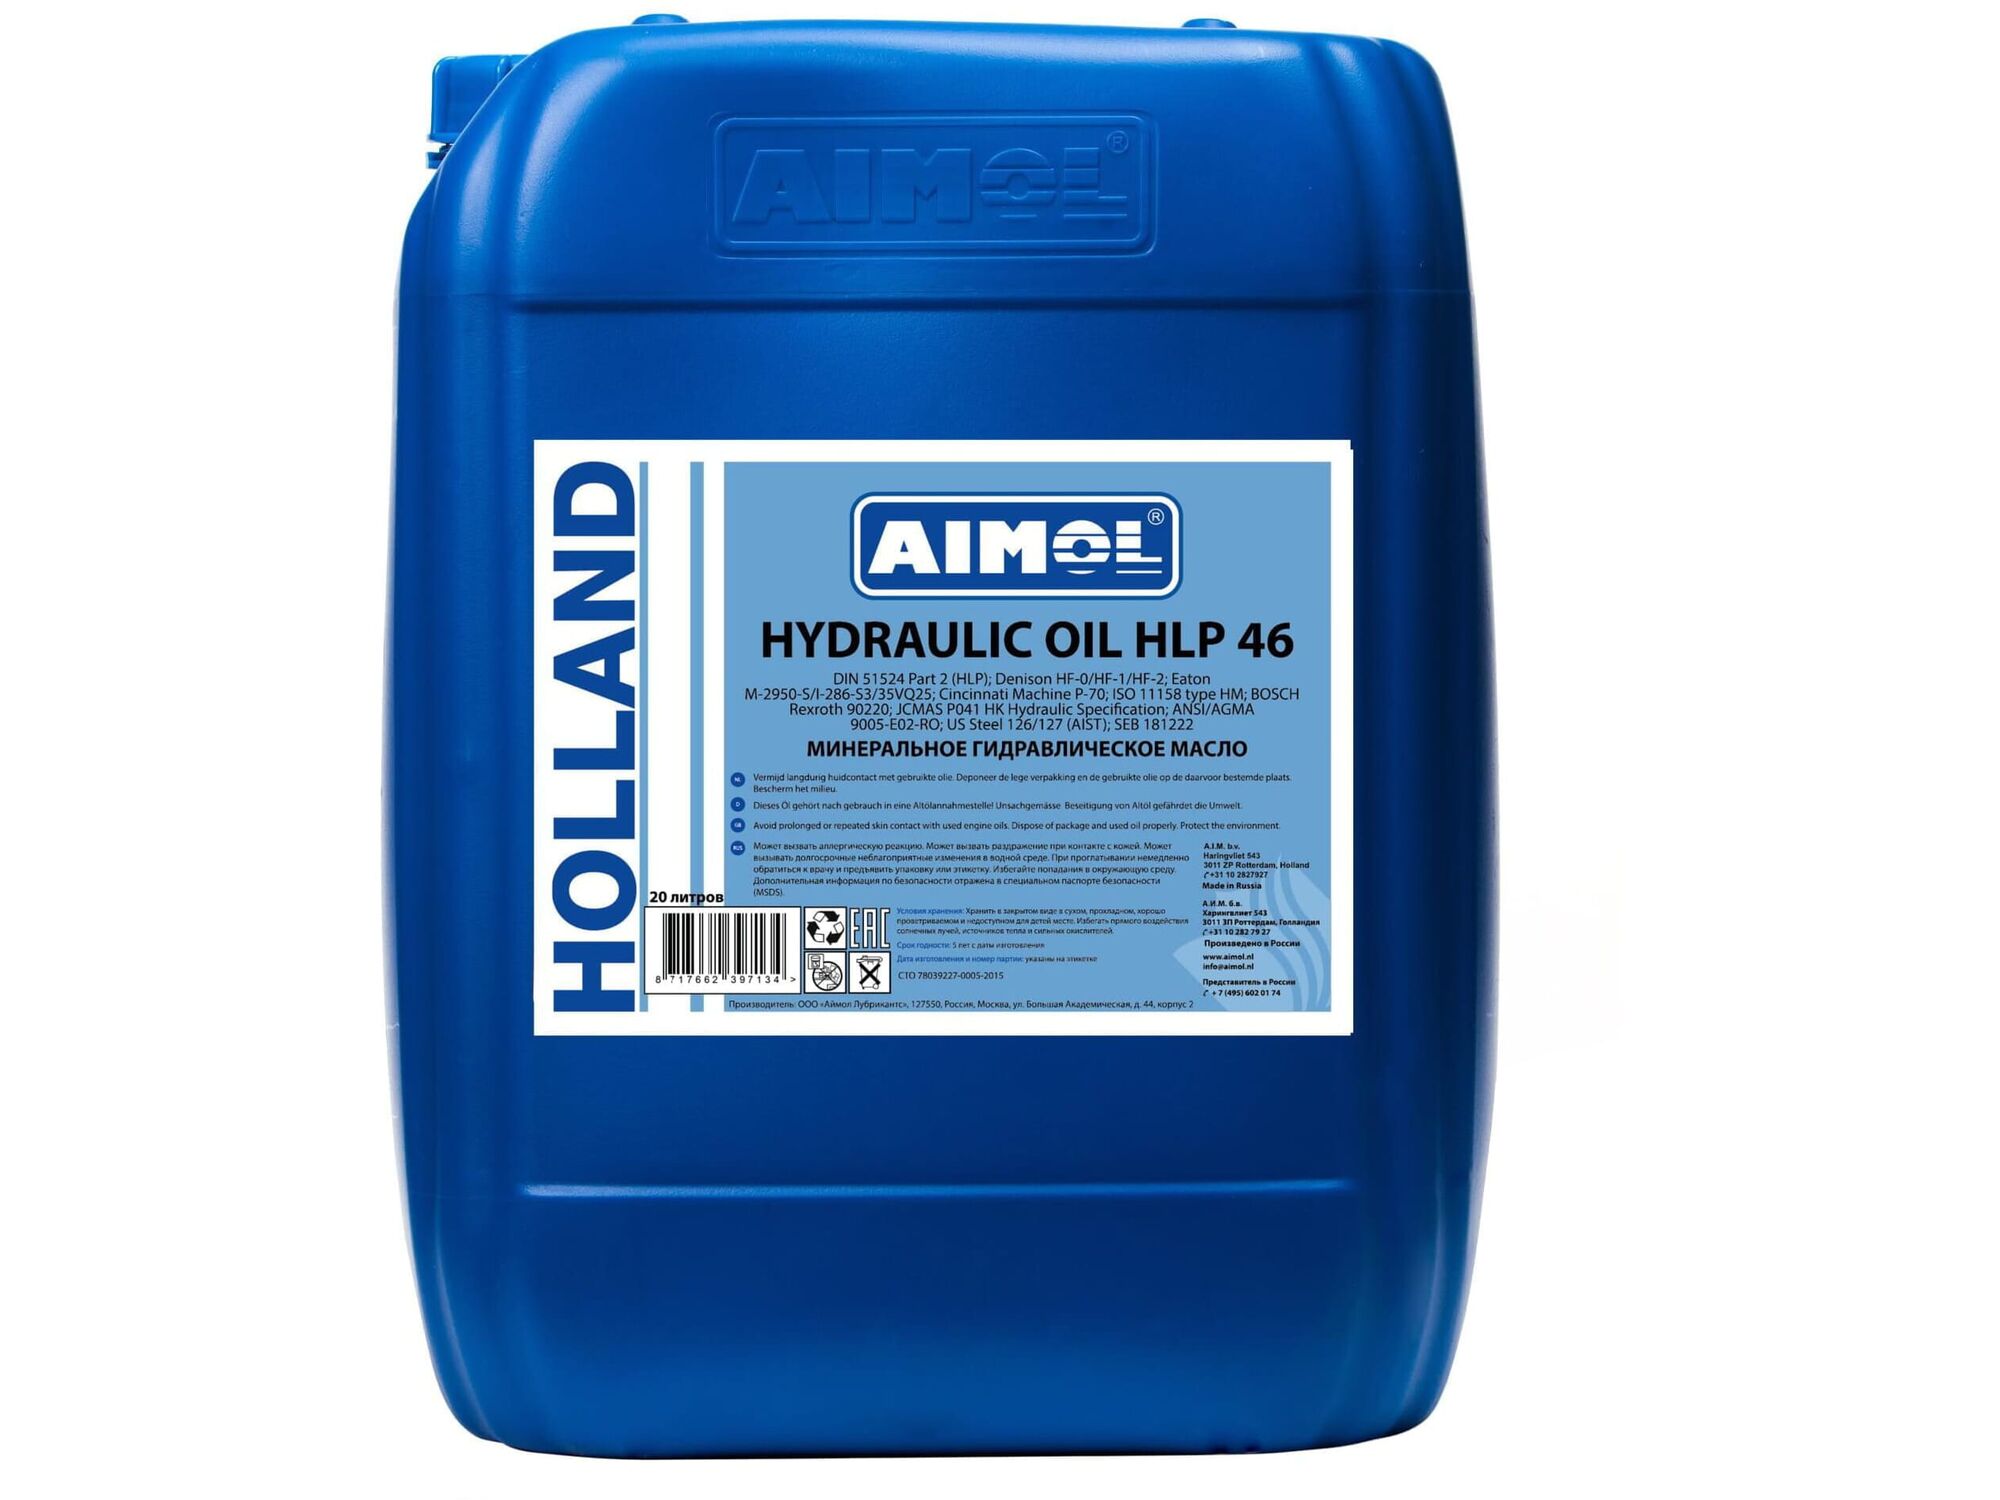 Масло гидравлическое Aimol Hydraulic Oil HLP 46, 20л